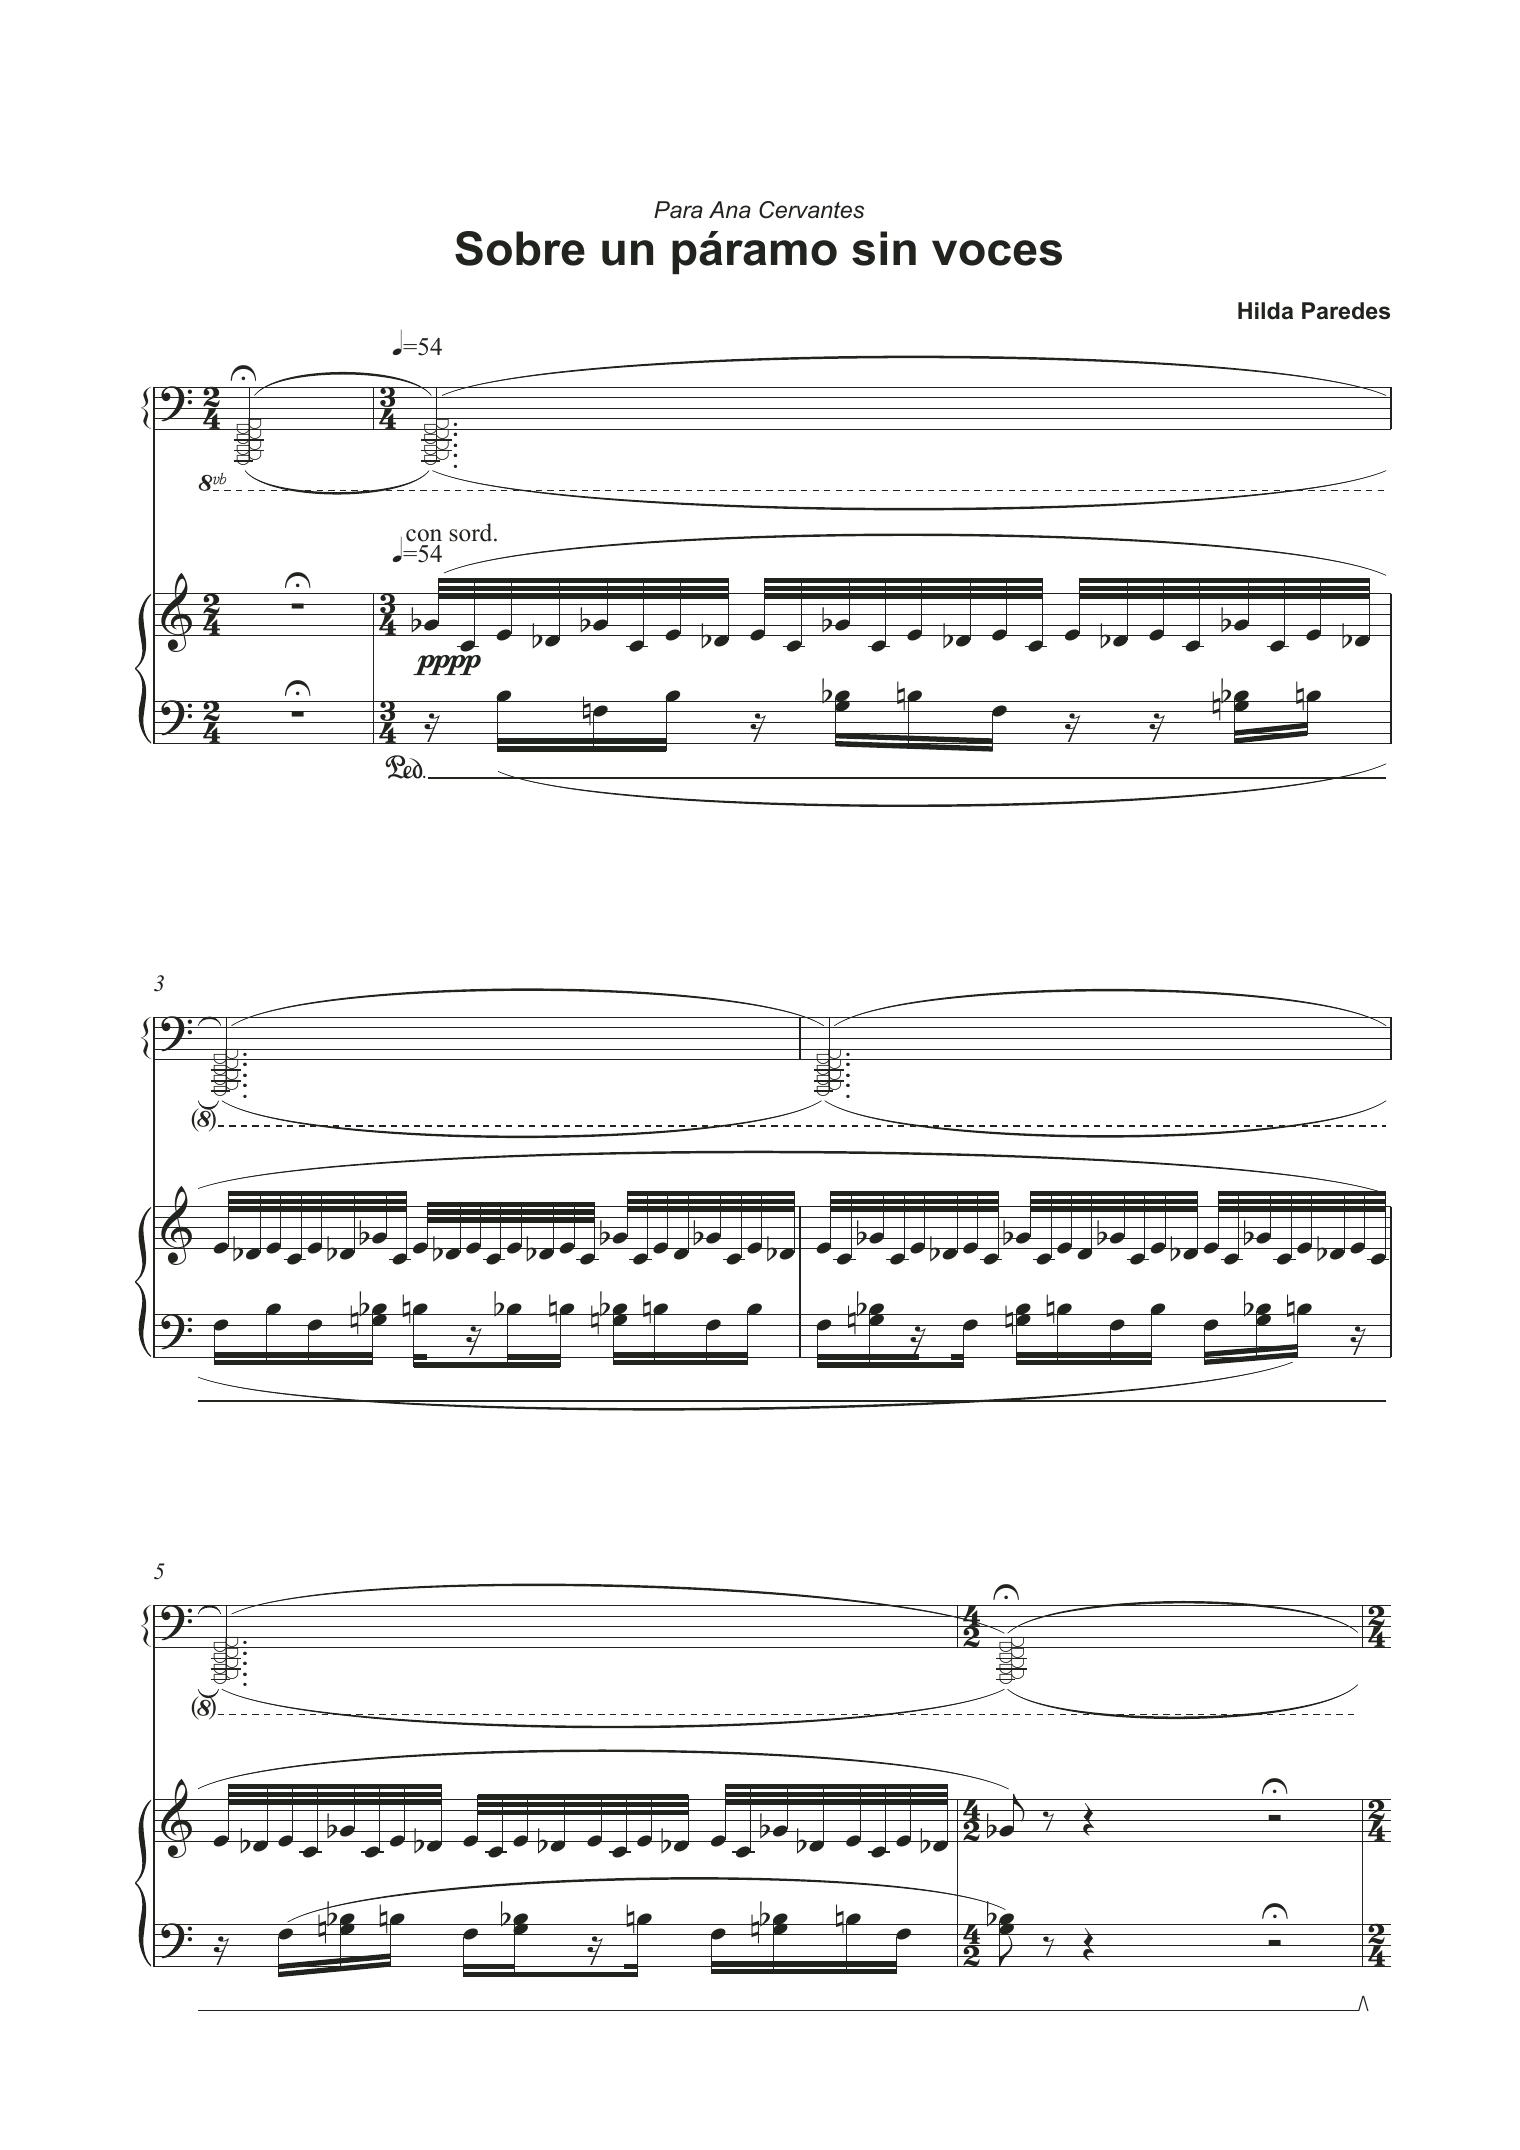 Hilda Paredes Sobre Un Paramo Sin Voces Sheet Music Notes & Chords for Piano - Download or Print PDF